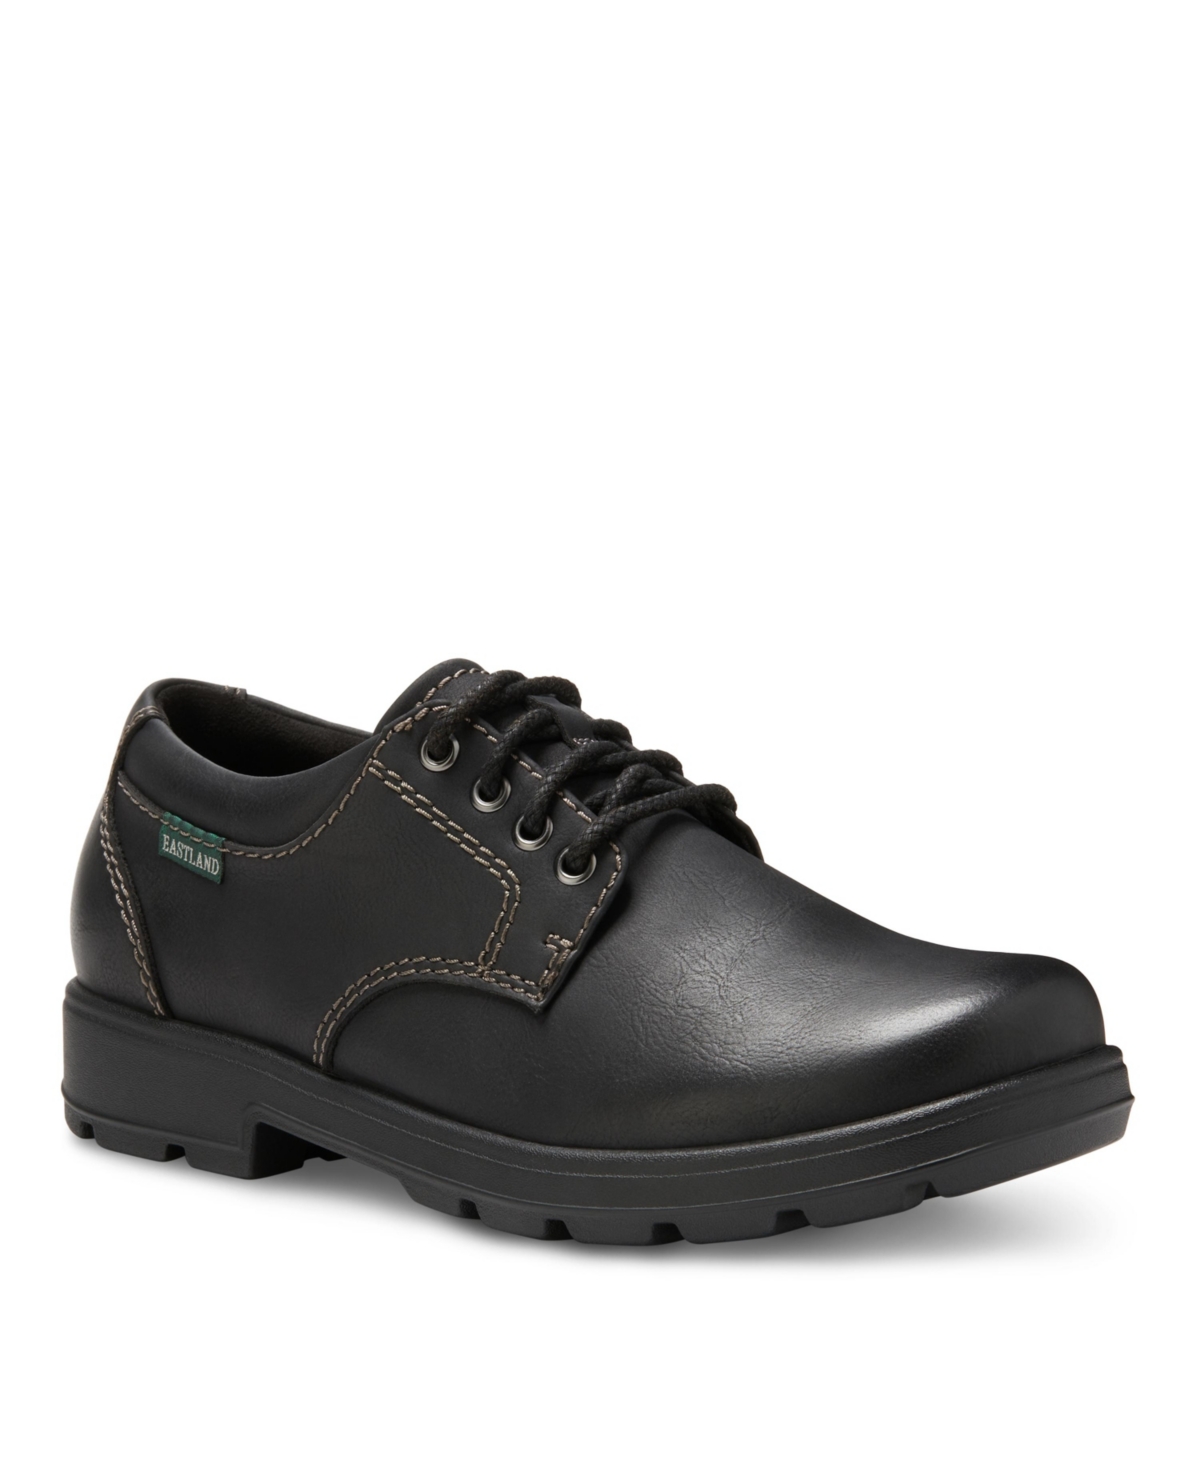 Men's Duncan Plain Toe Oxford Shoes - Nutmeg